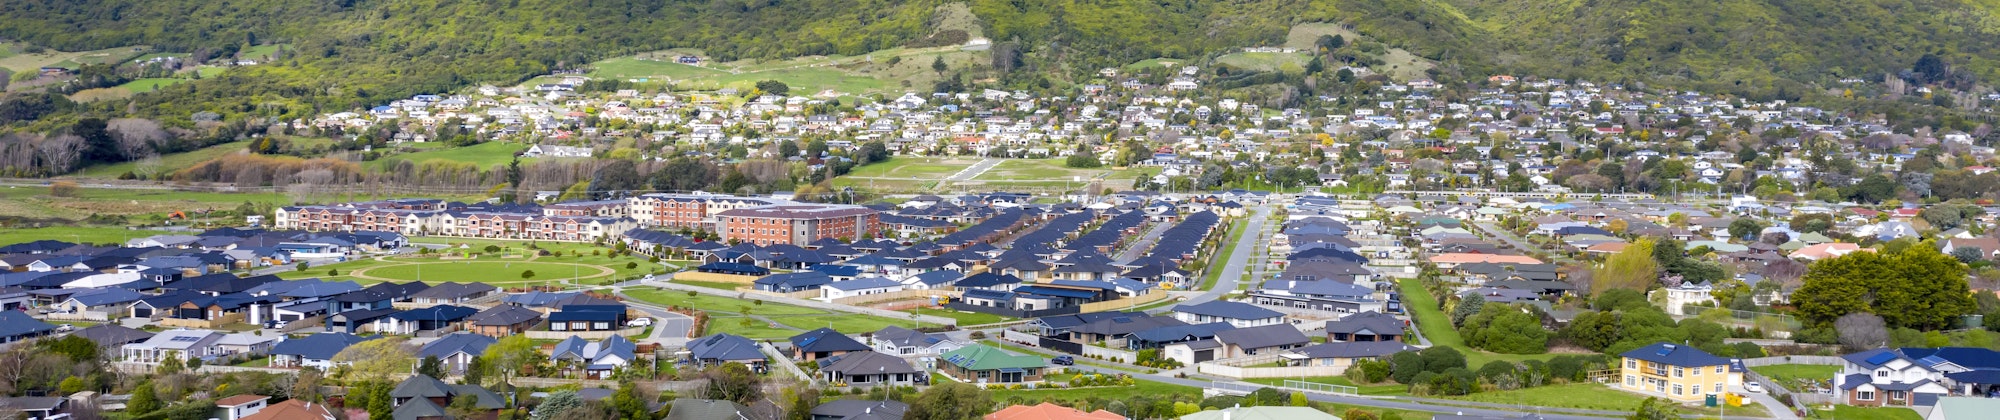 Medium density development in Kāpiti | Case Study | TPG NZ